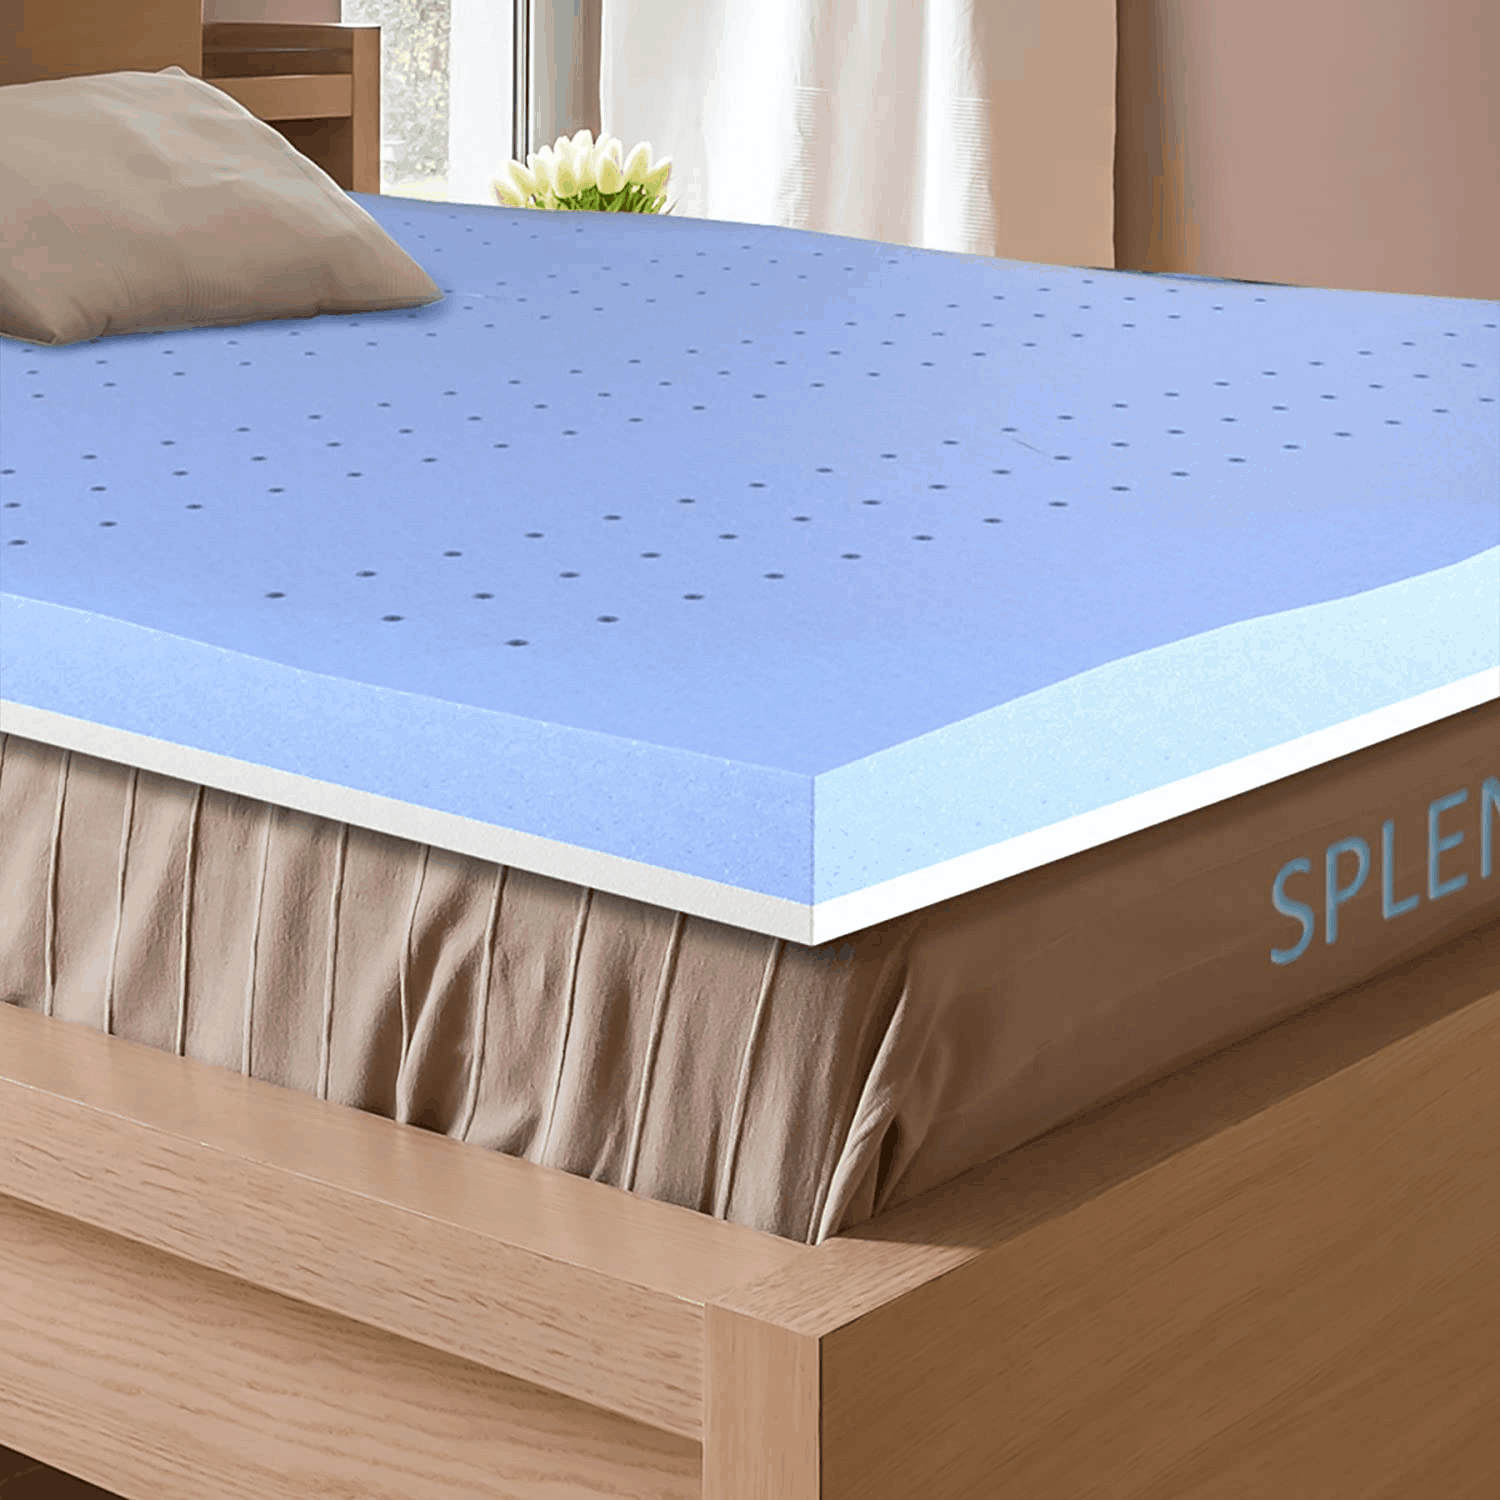 How to Choose a Mattress Topper for a Lumpy Mattress futon mattress full size amazon